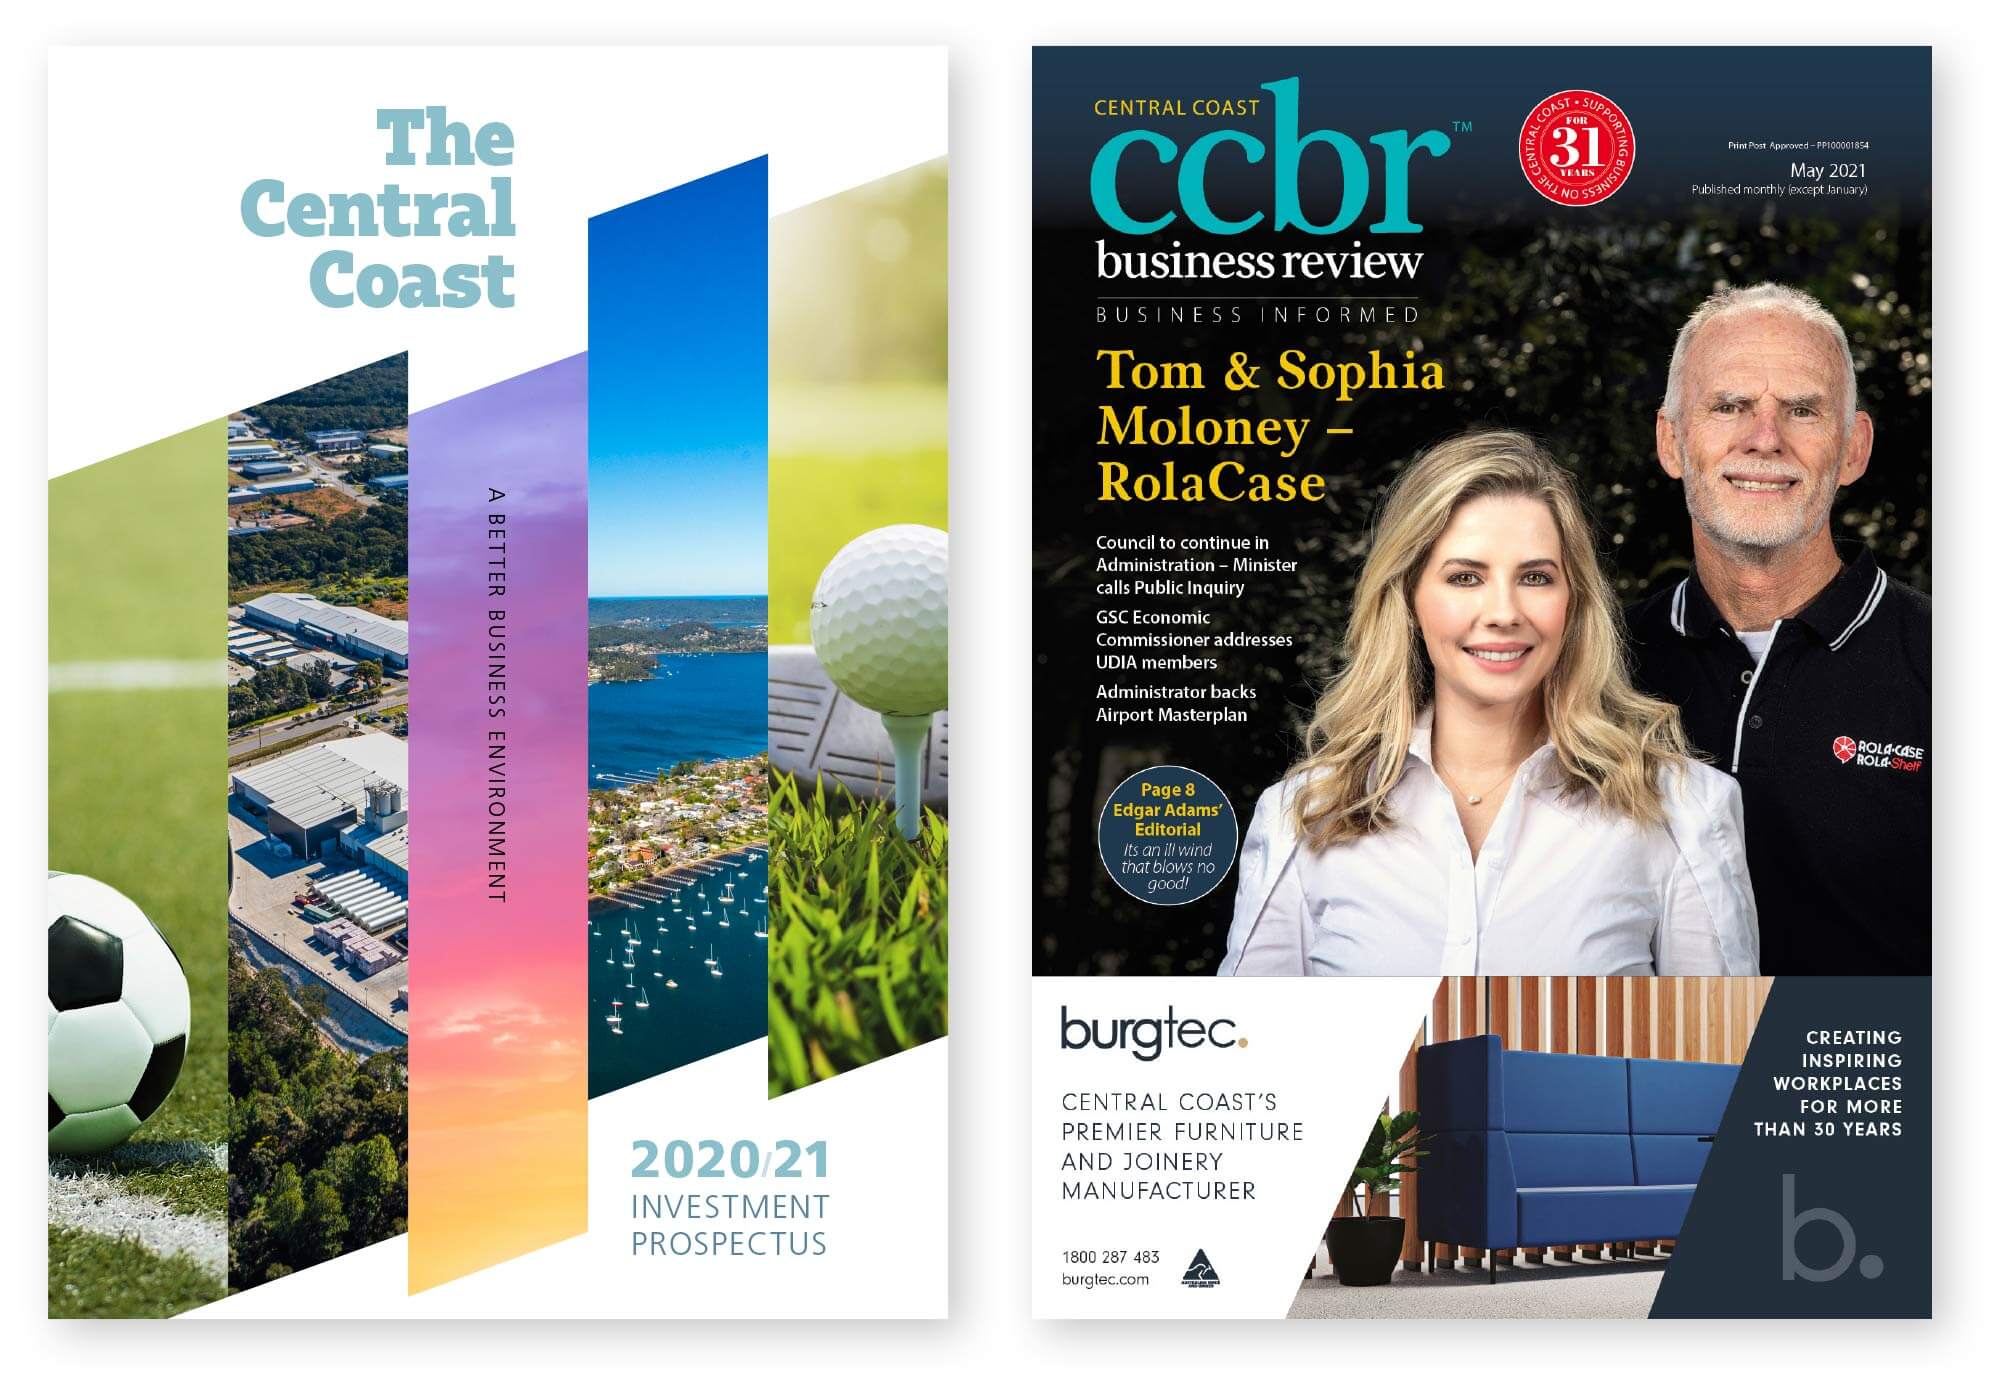 Central Coast Business Review - Investment Prospectus design